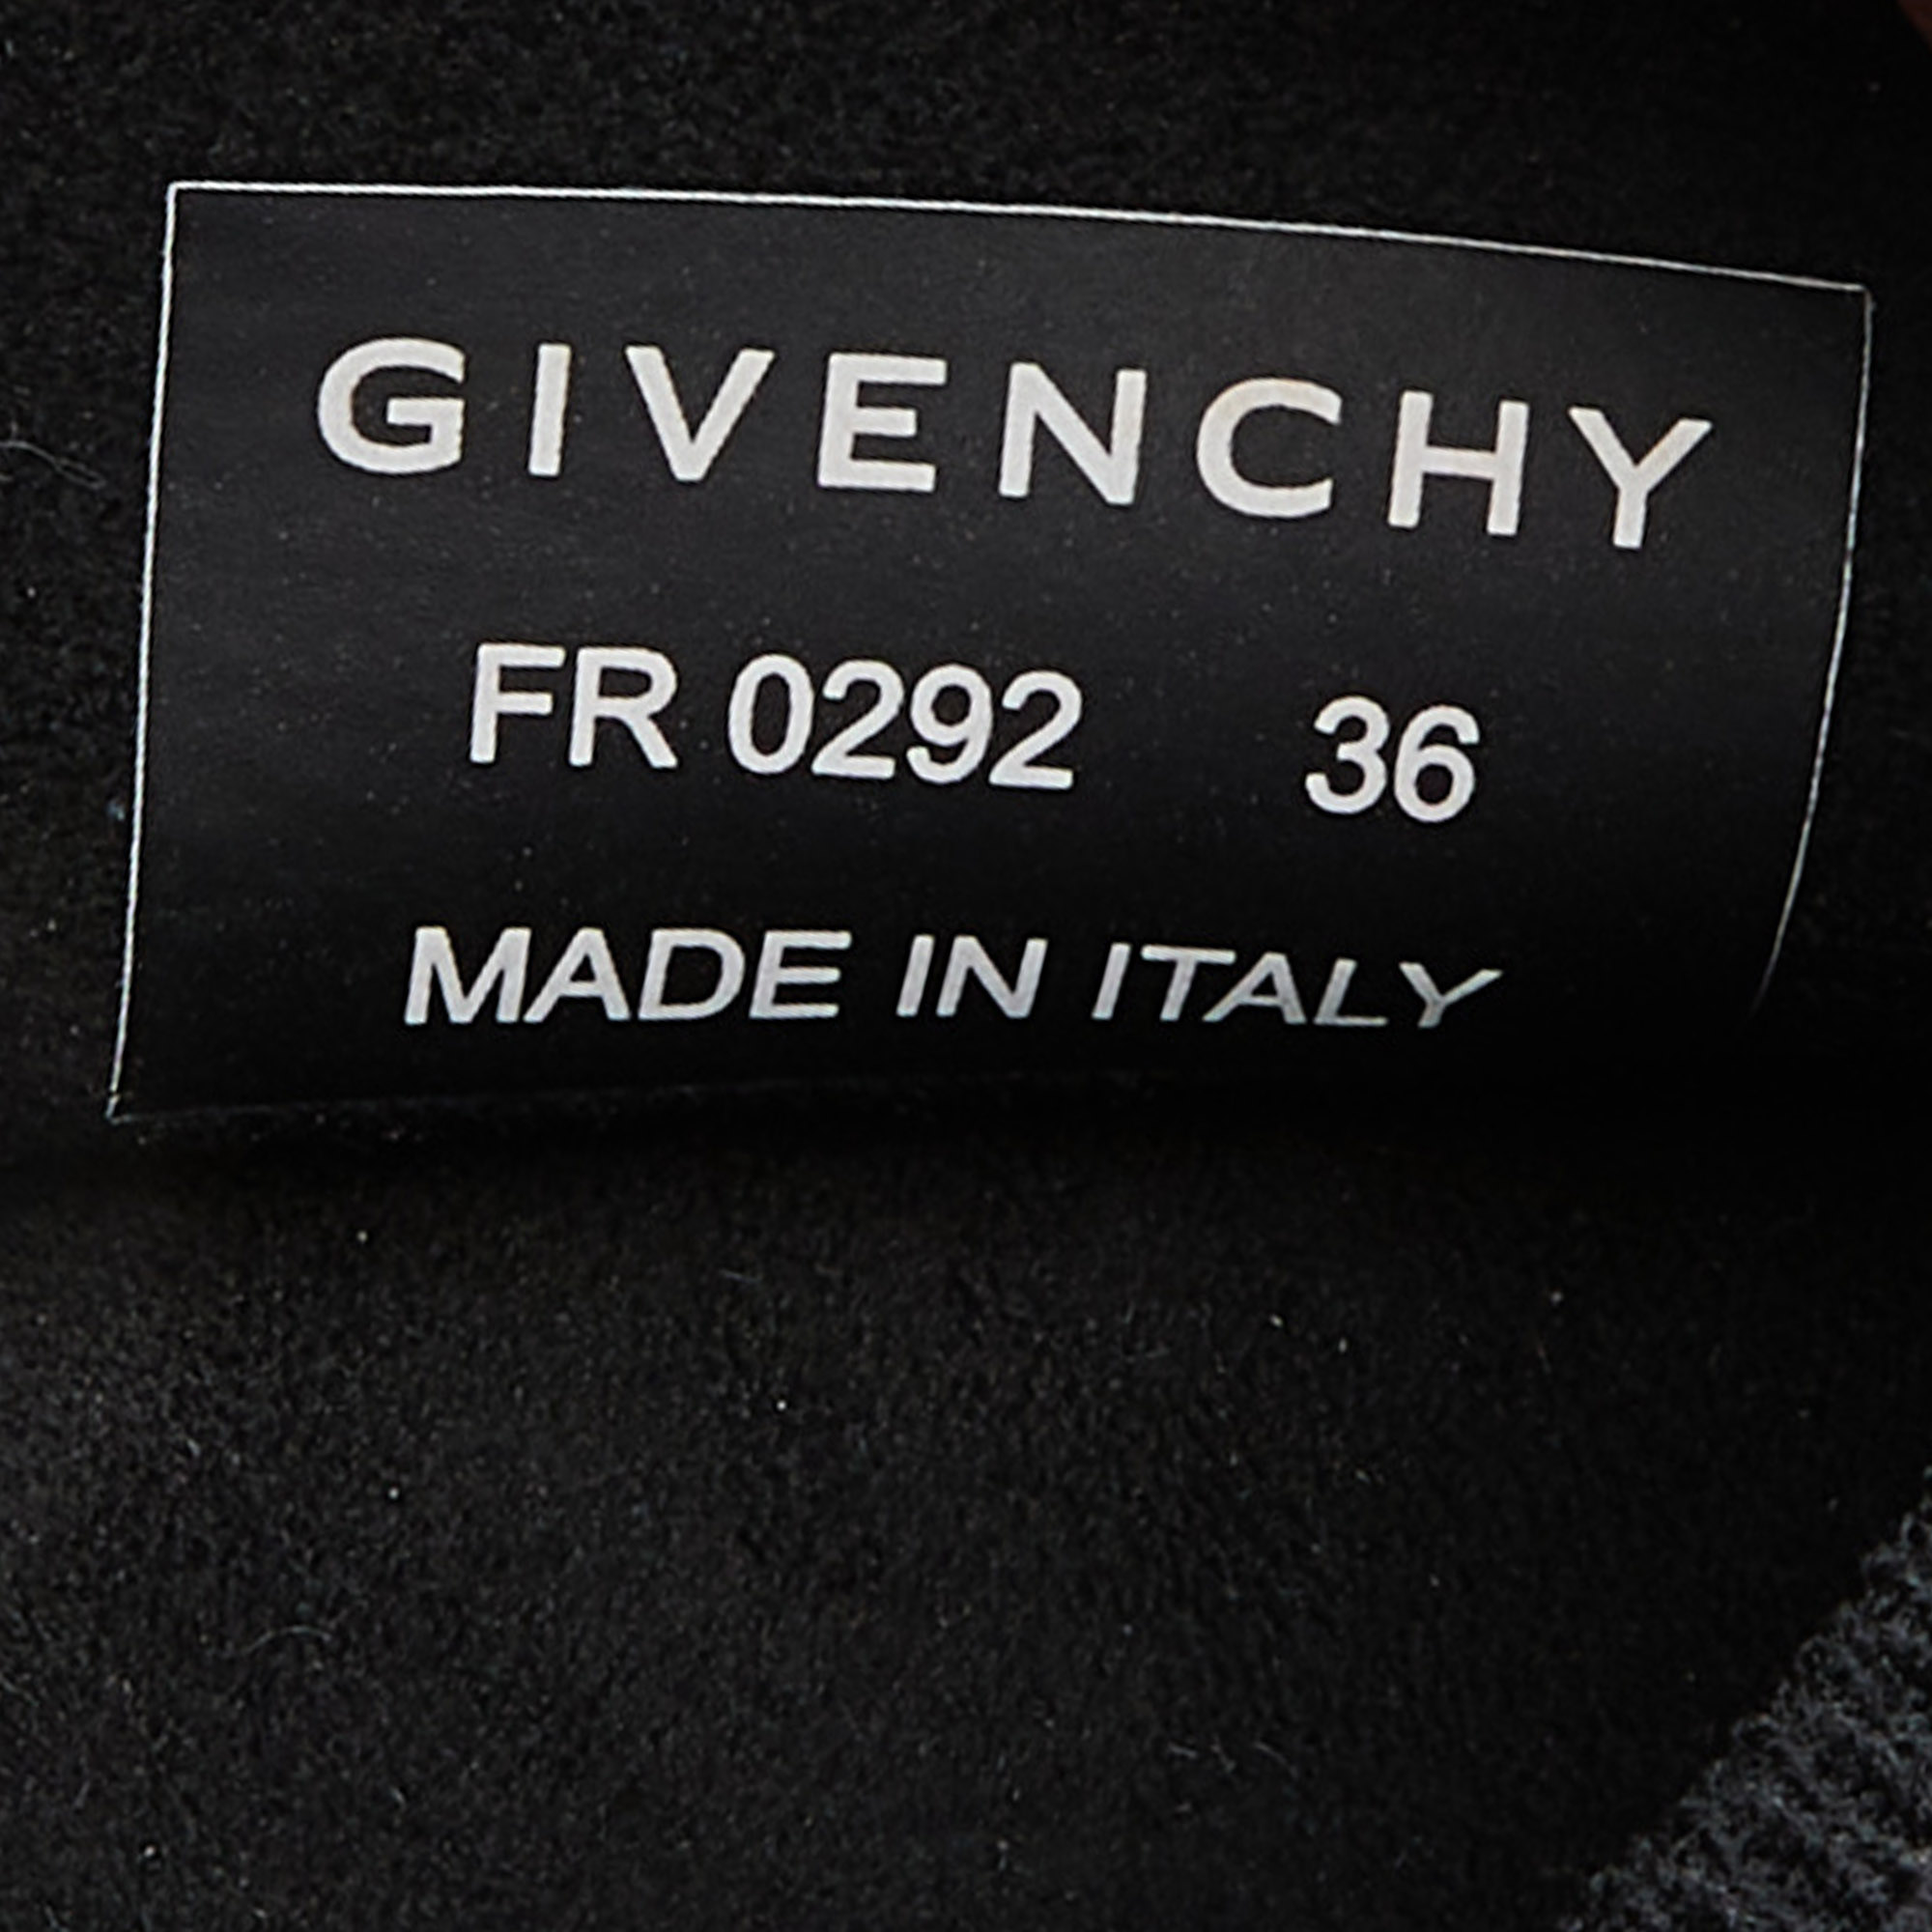 Givenchy Black Stretch Knit TK-360 Sneakers Size 36